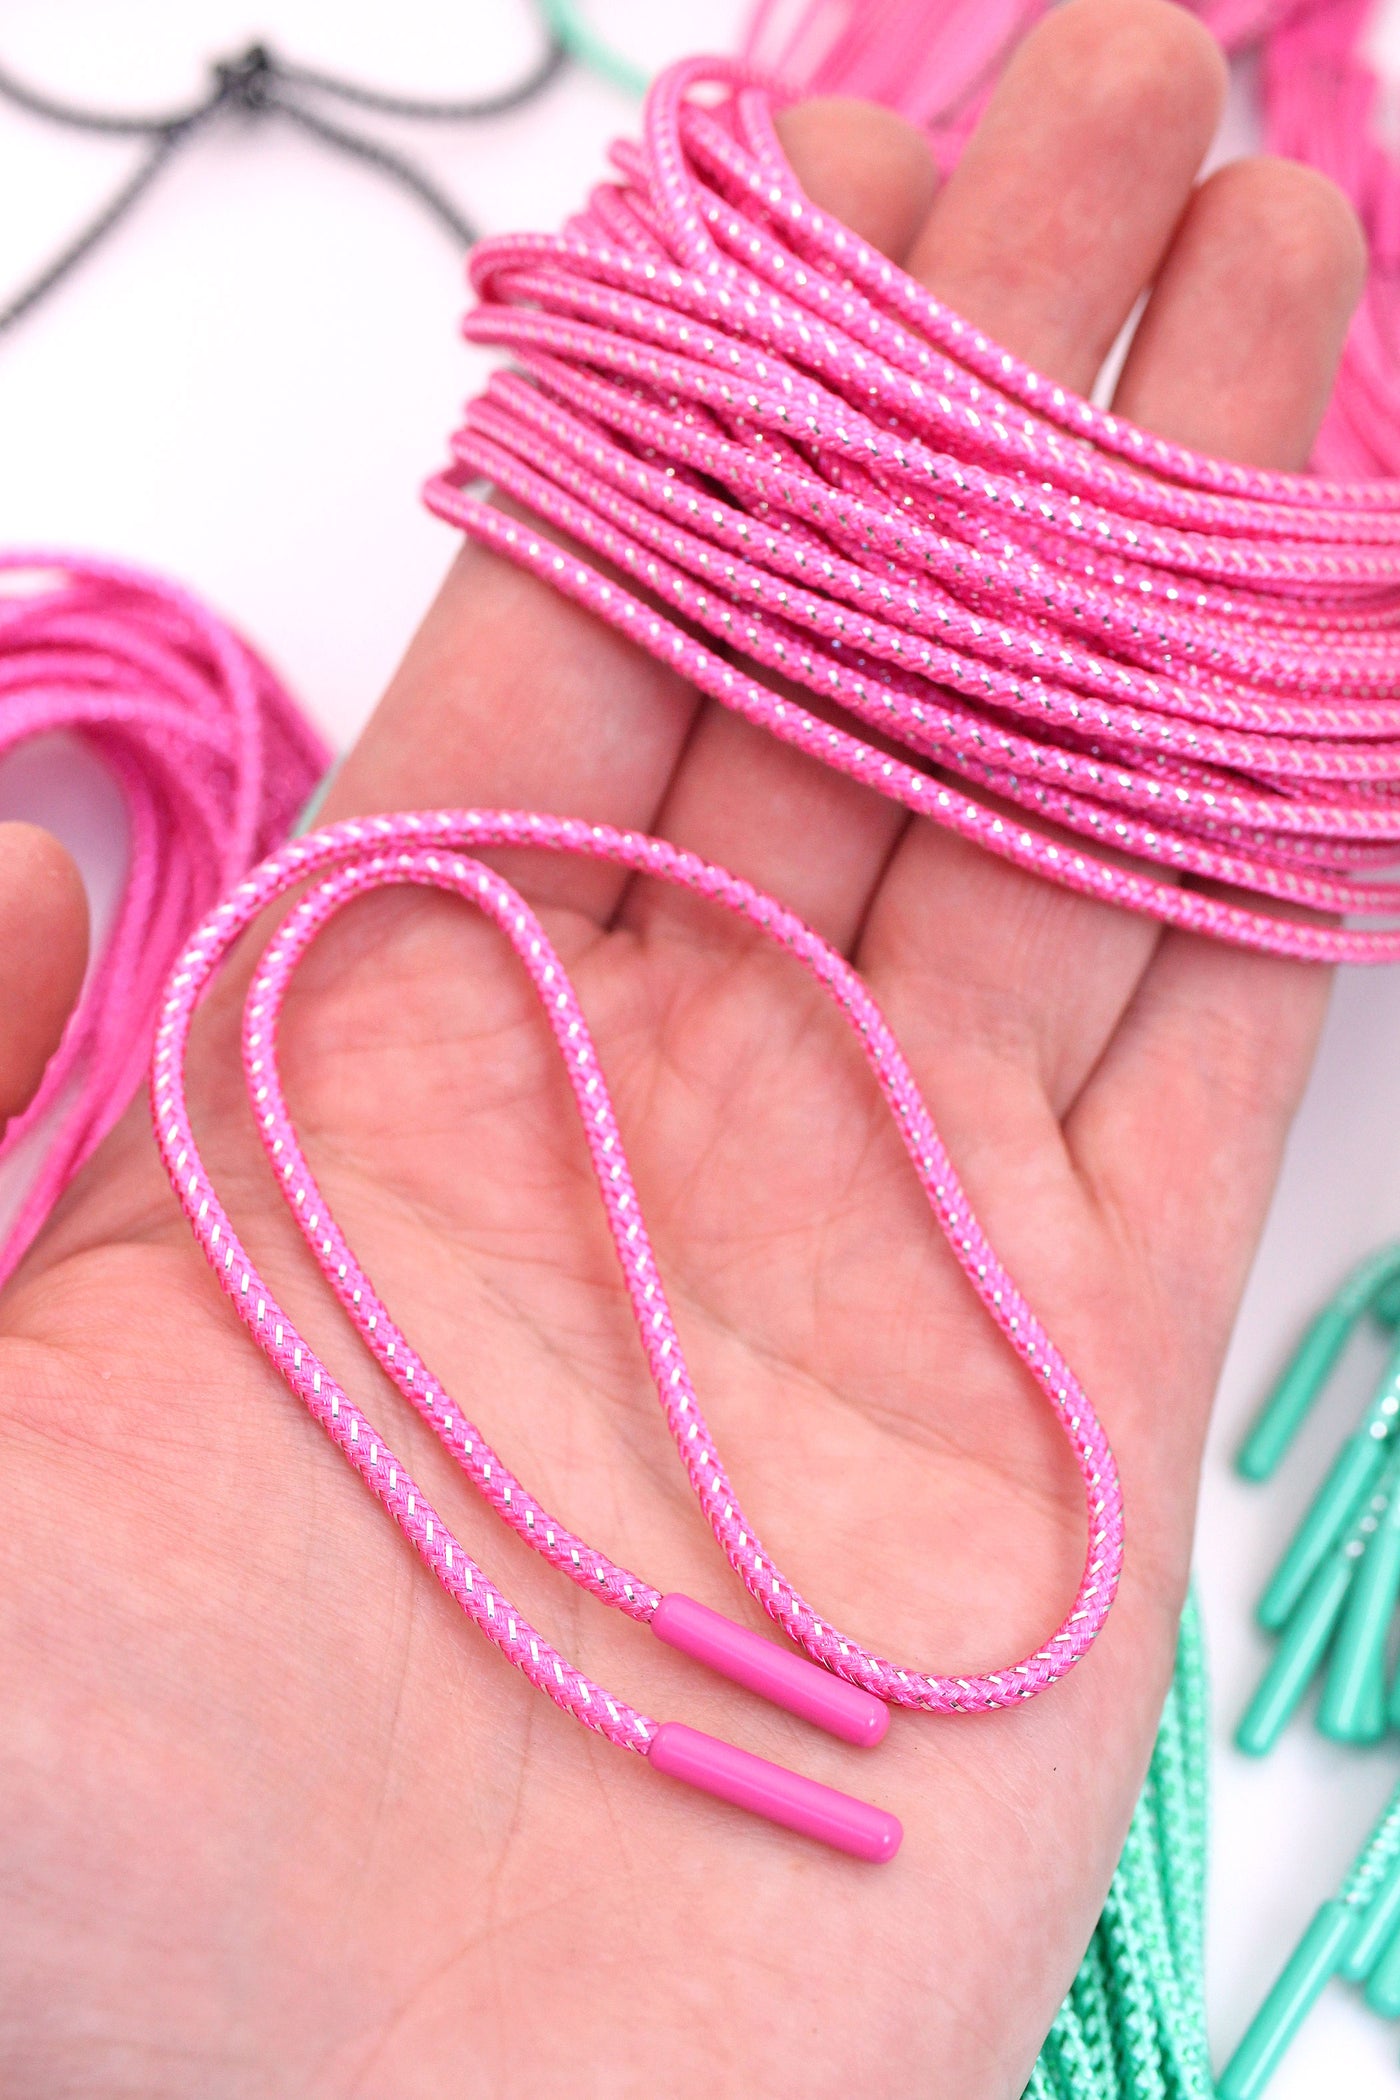 Elastic Cord Stretchy String 2mm 49 Yards Pink for Crafts, Bracelets